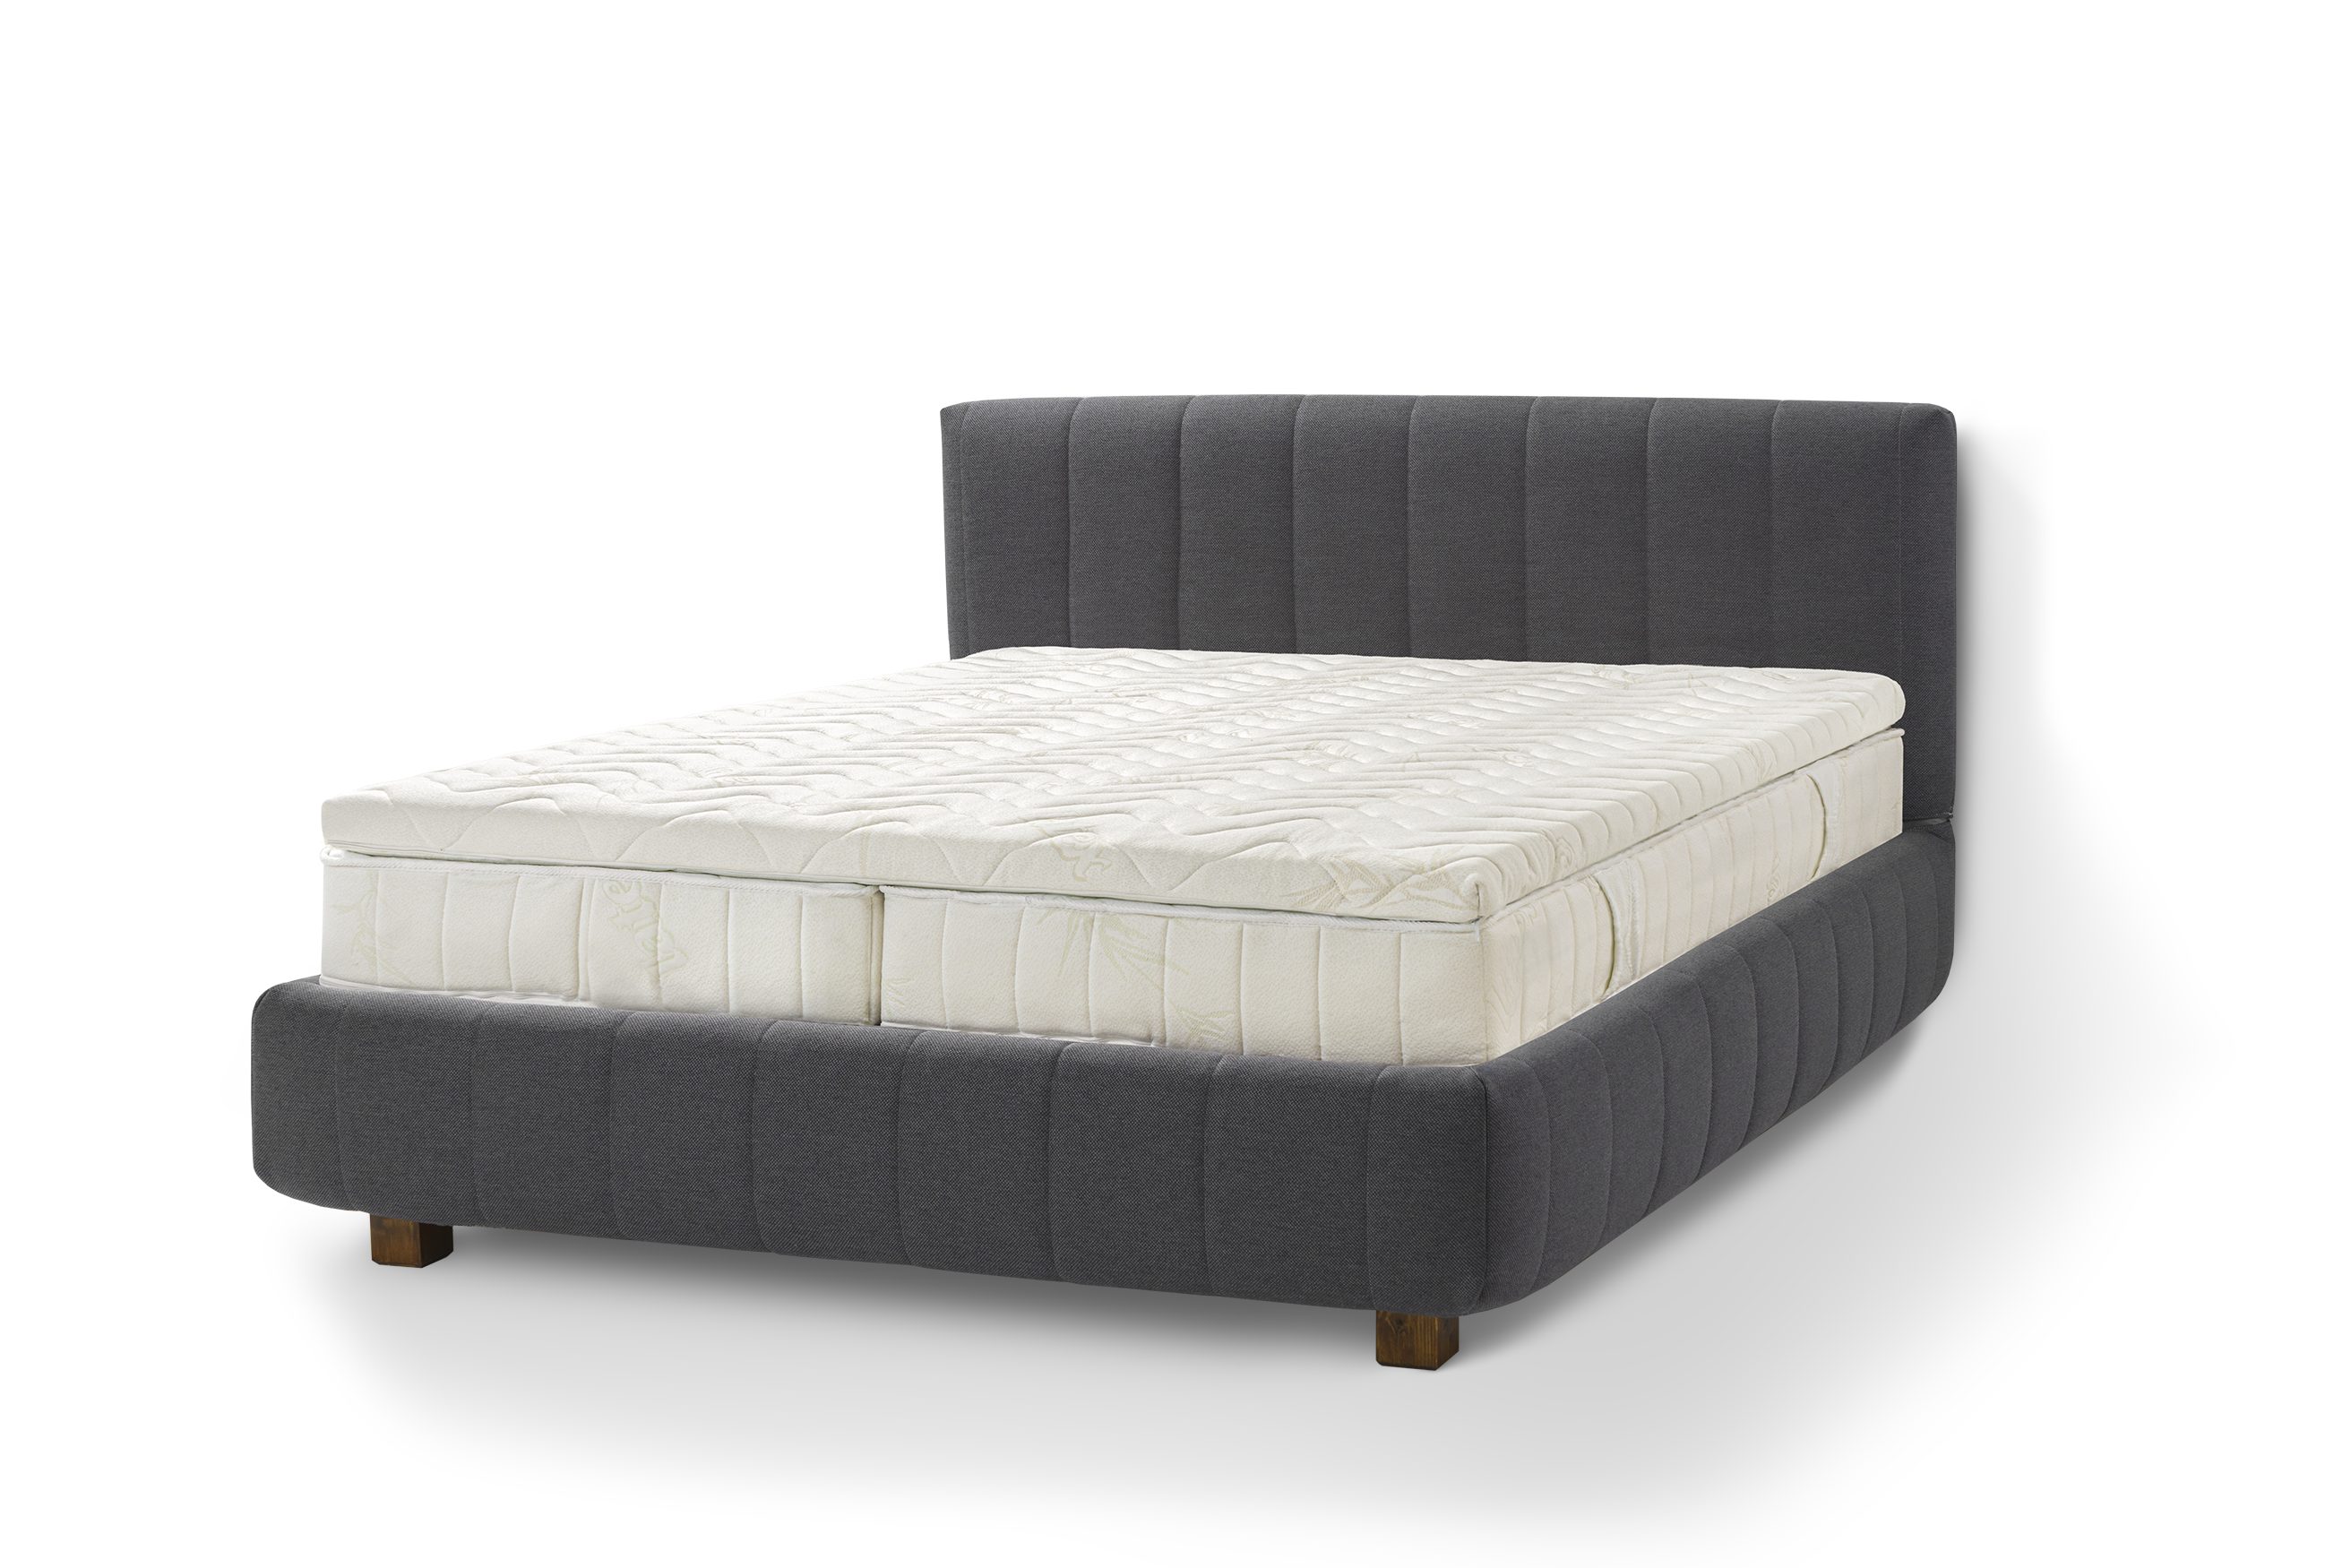 Letti Moderni Holzbett Bett Calma, hergestellt aus hochwertigem Massivholz Siena Dark Gray